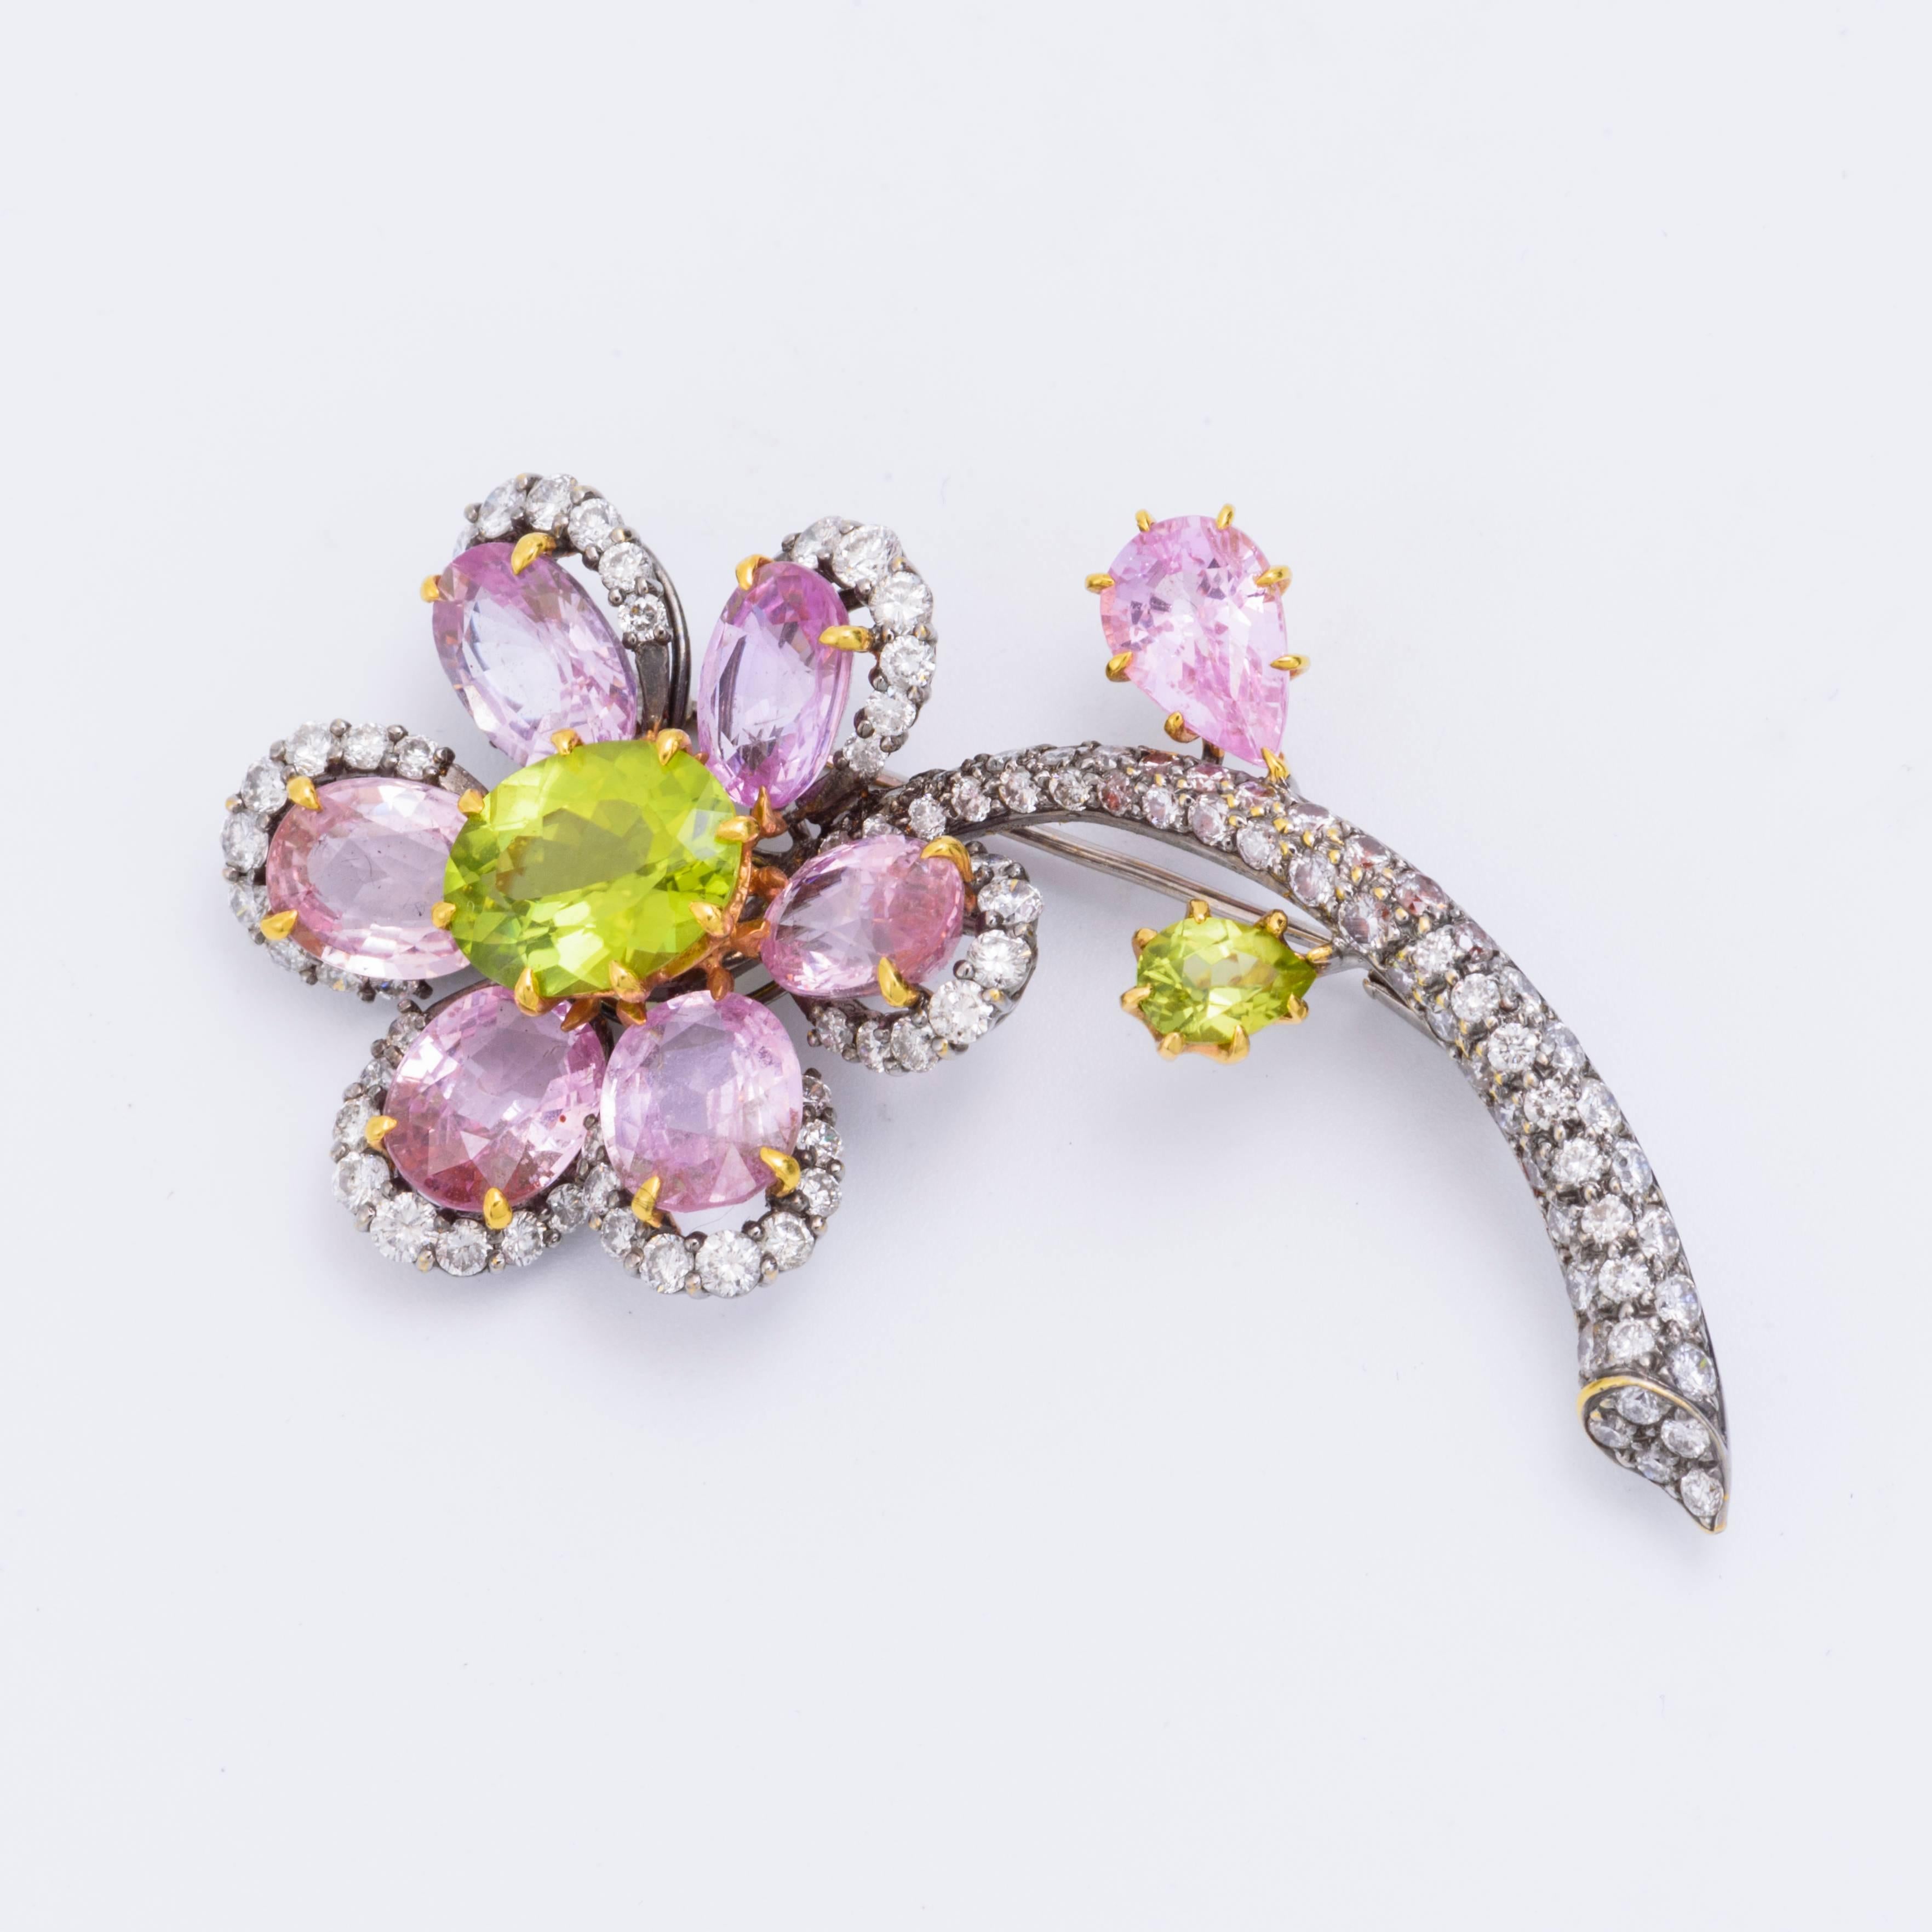 18kt Gold Flower Pin featuring White Diamond, Pink Sapphire, and Green Peridot.
108 White Diamonds 3.00ctw
7 Pink Sapphire
2 Green Peridot